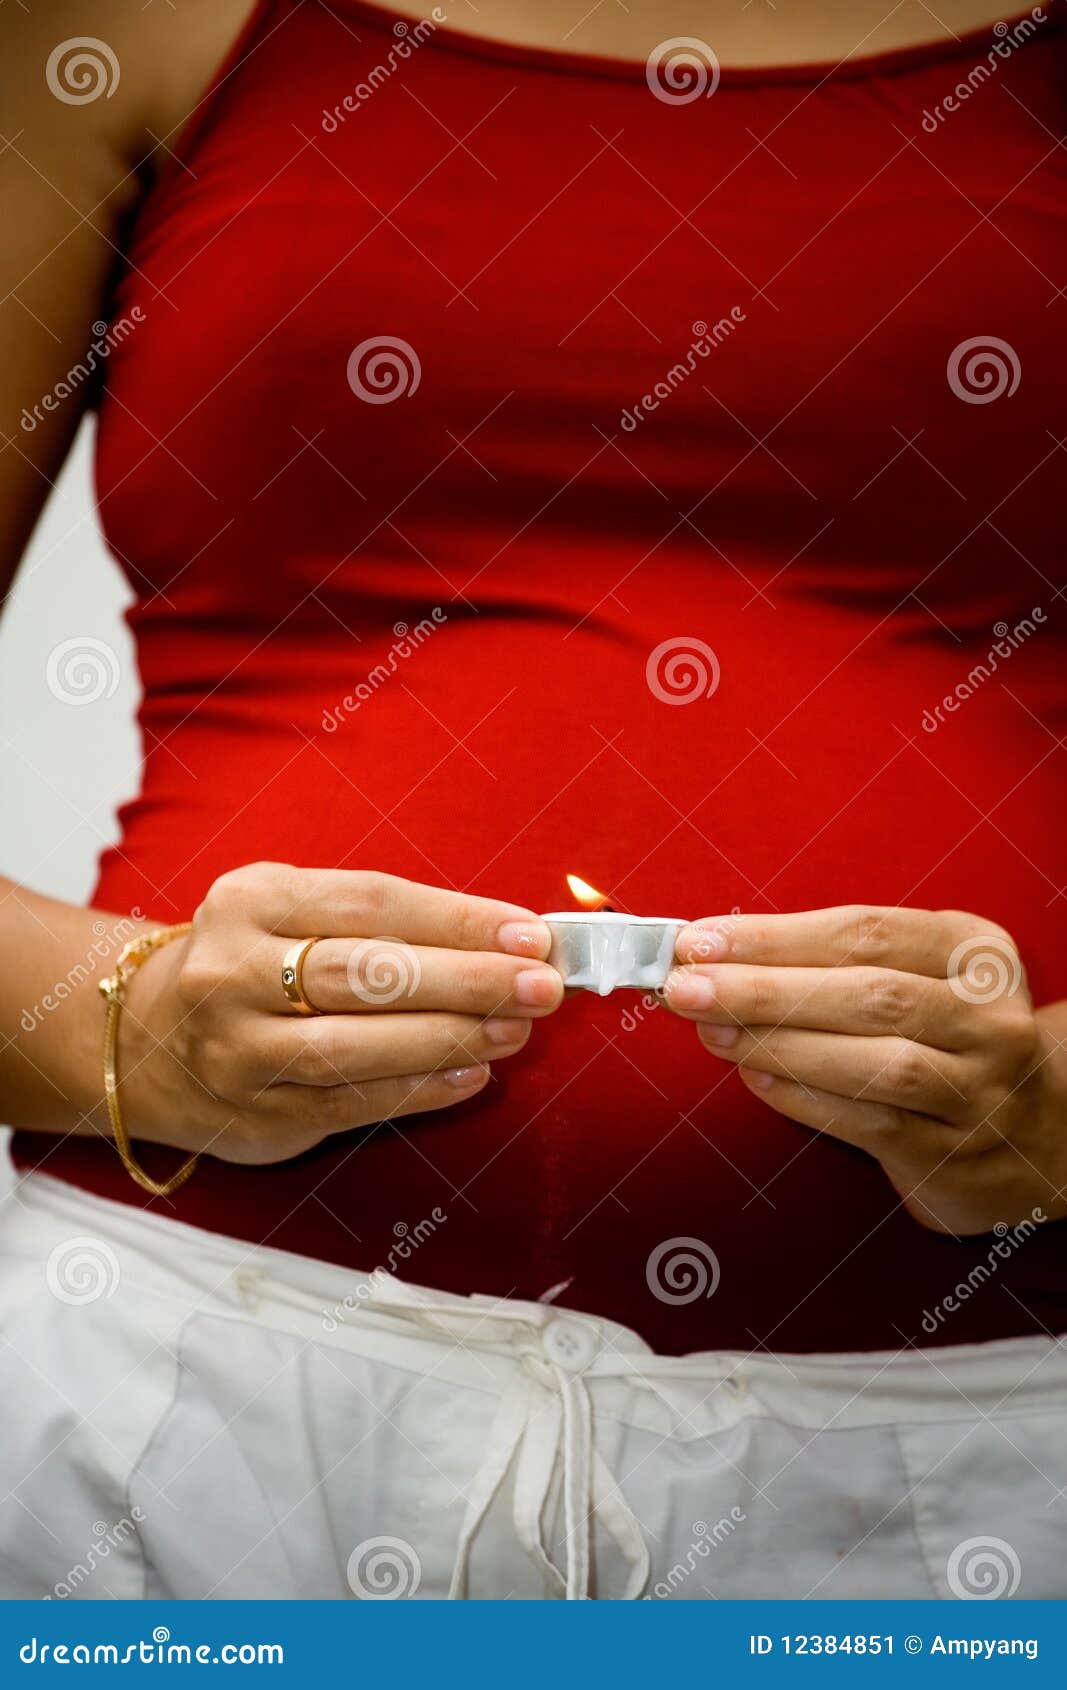 Pregnant Woman Holding Burning Candle Stock Image Image 12384851